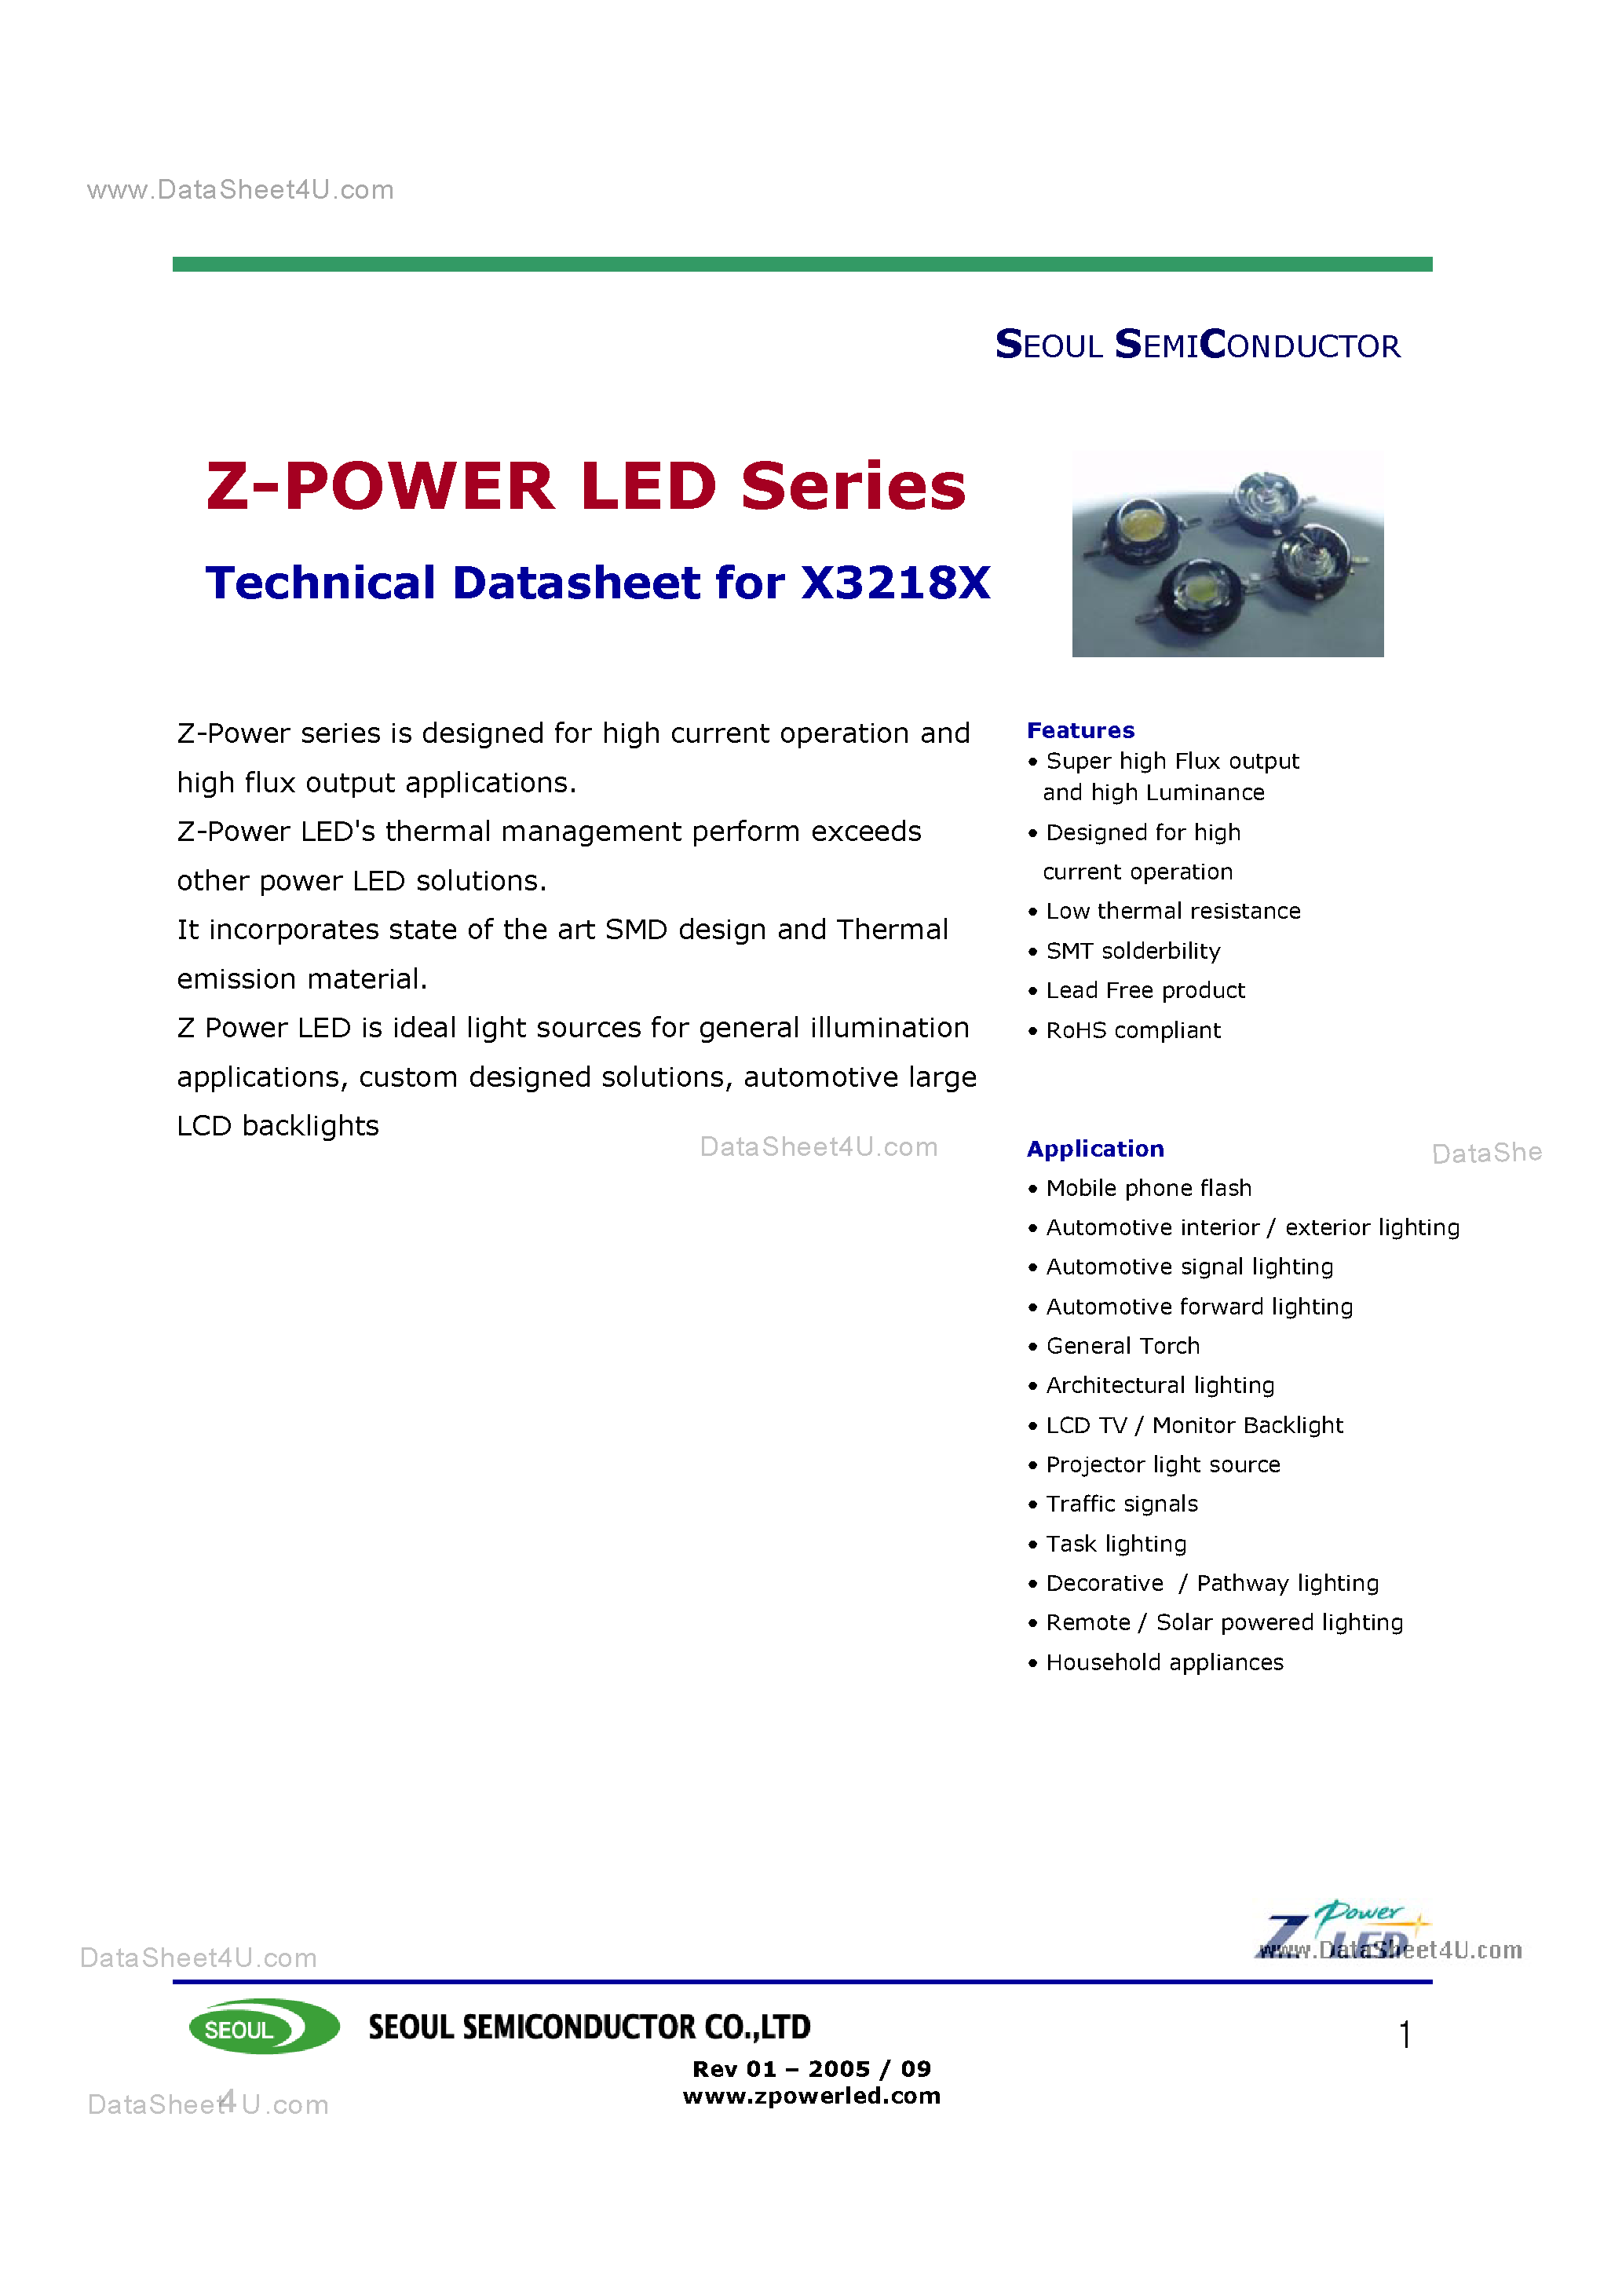 Даташит W32180 - (W3218x) Z-Power LED Series страница 1